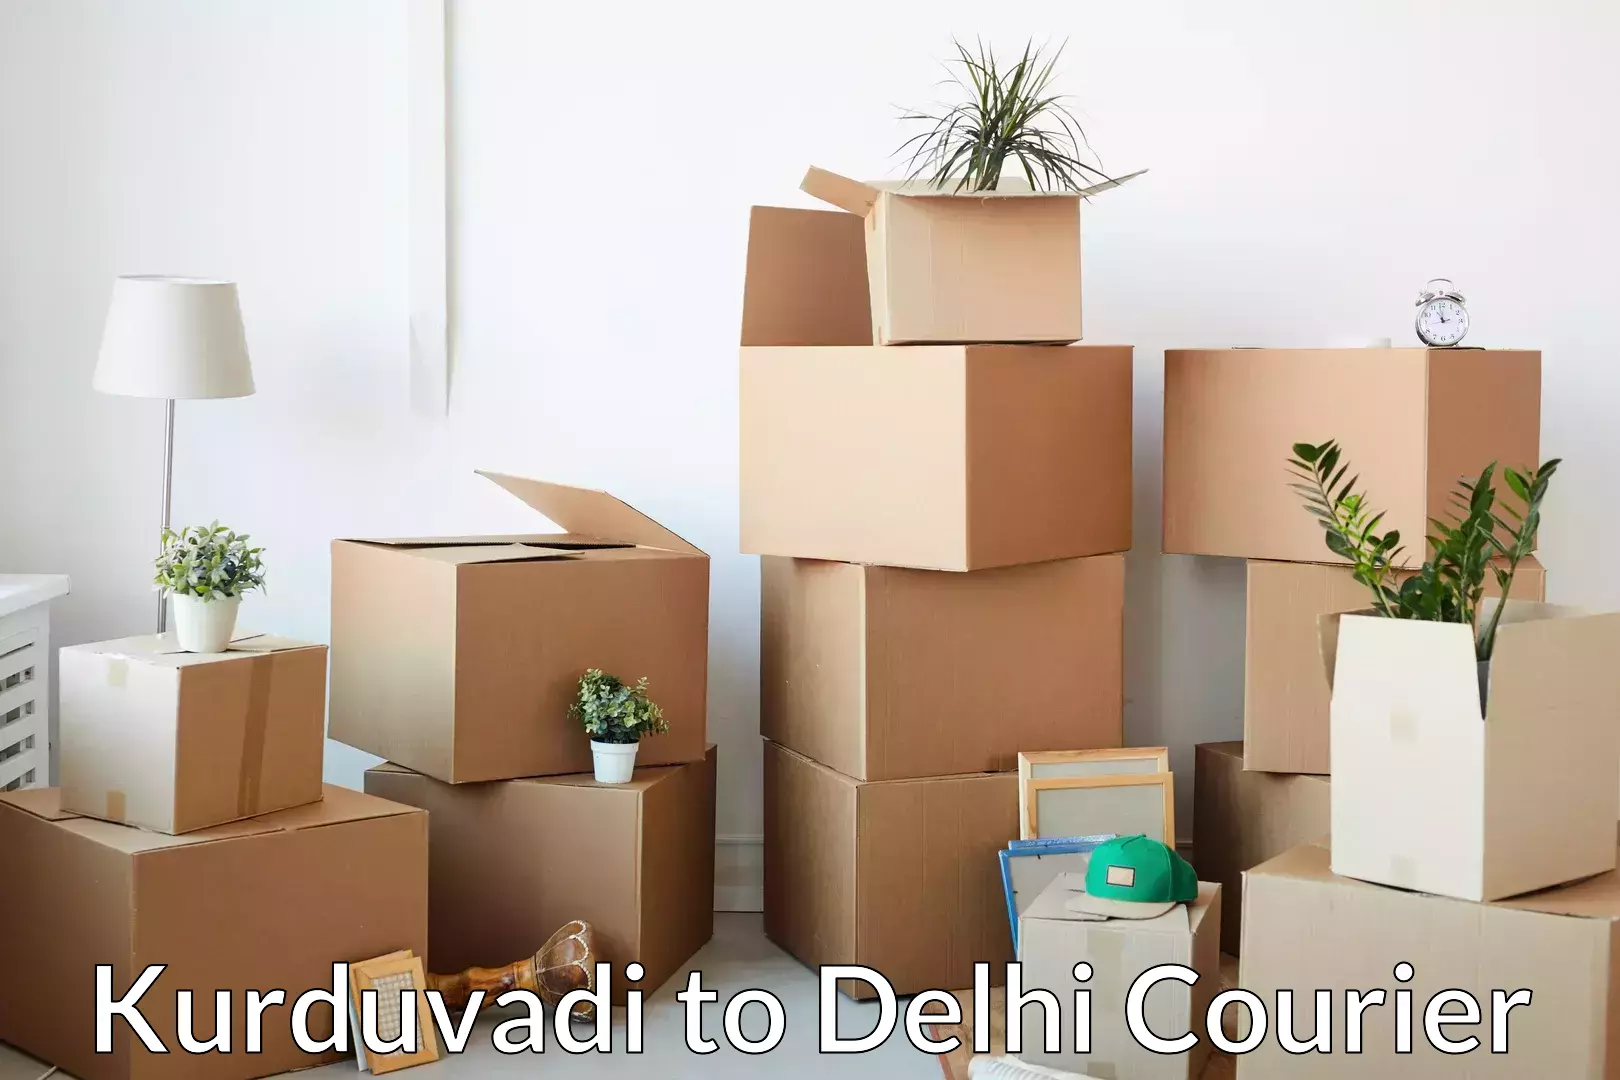 Skilled furniture transporters Kurduvadi to Delhi